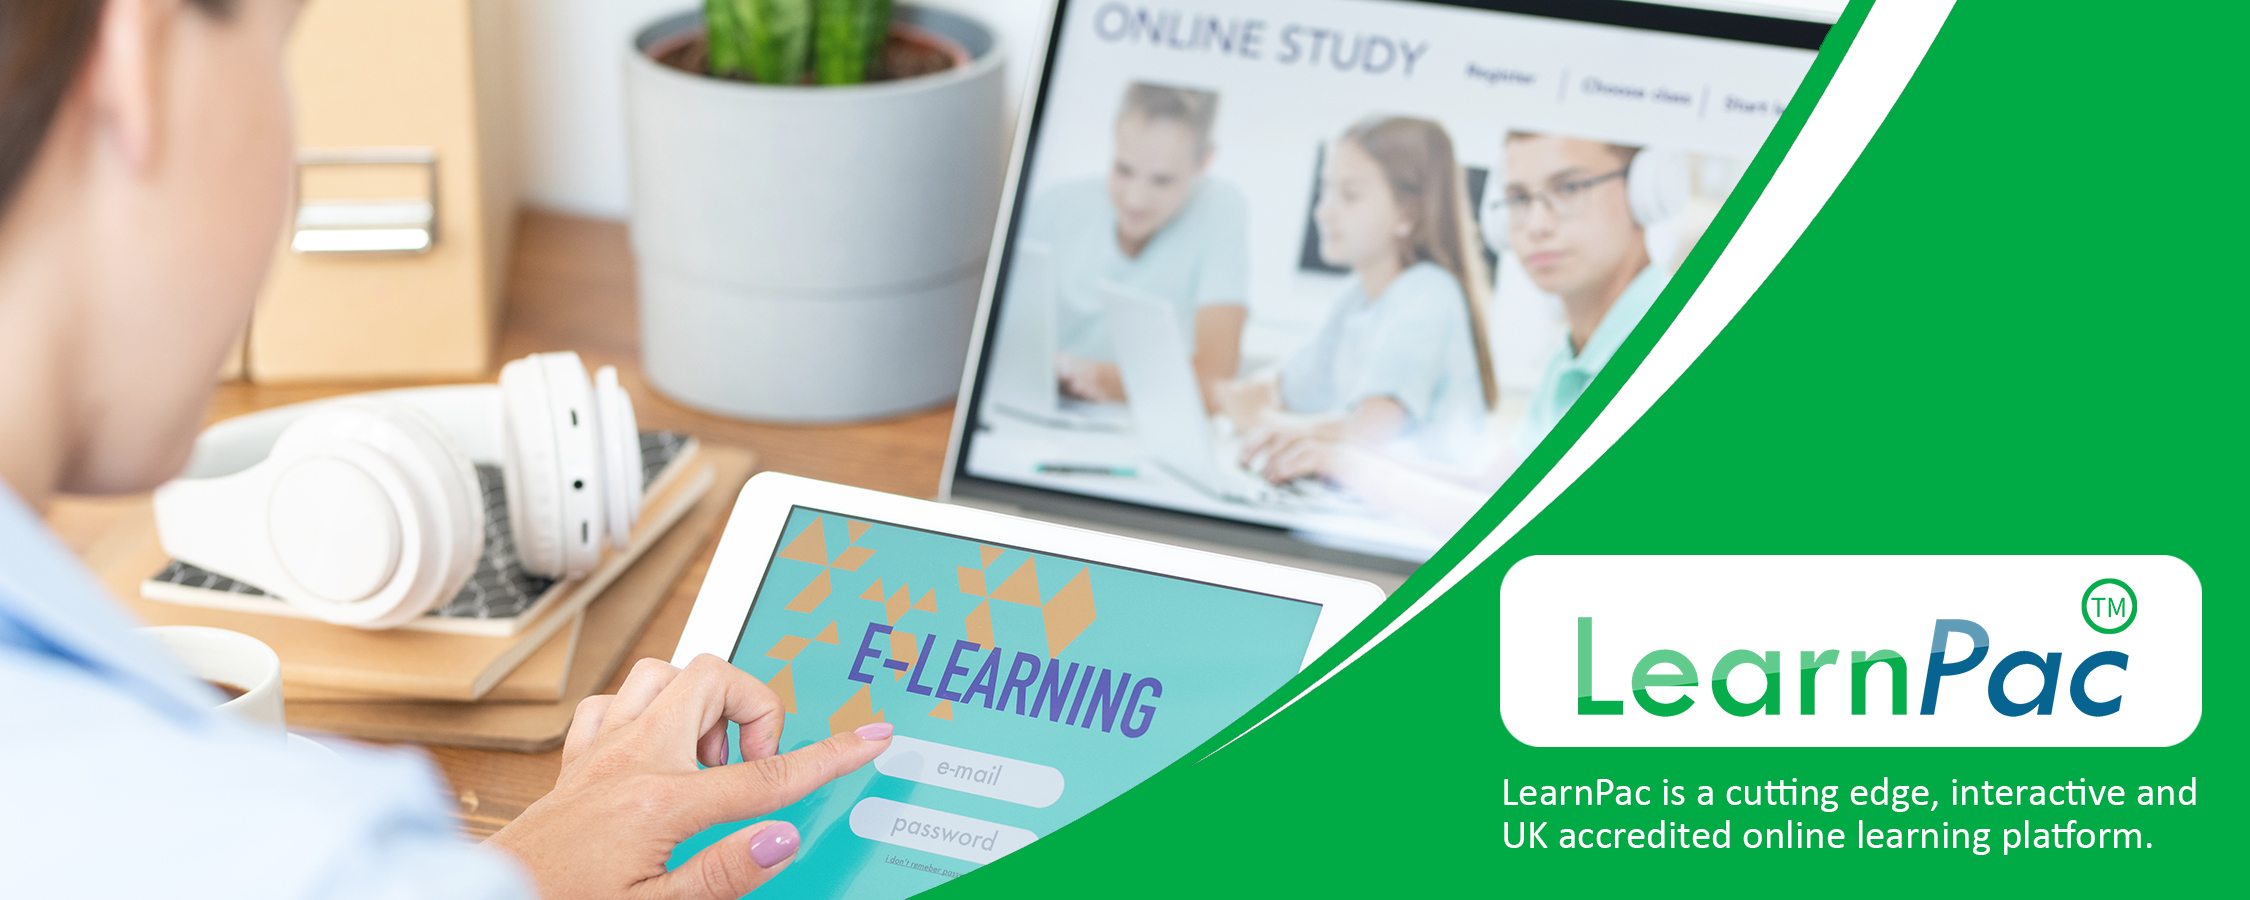 Safeguarding Legislation - Online Learning Courses - E-Learning Courses - LearnPac Systems UK -